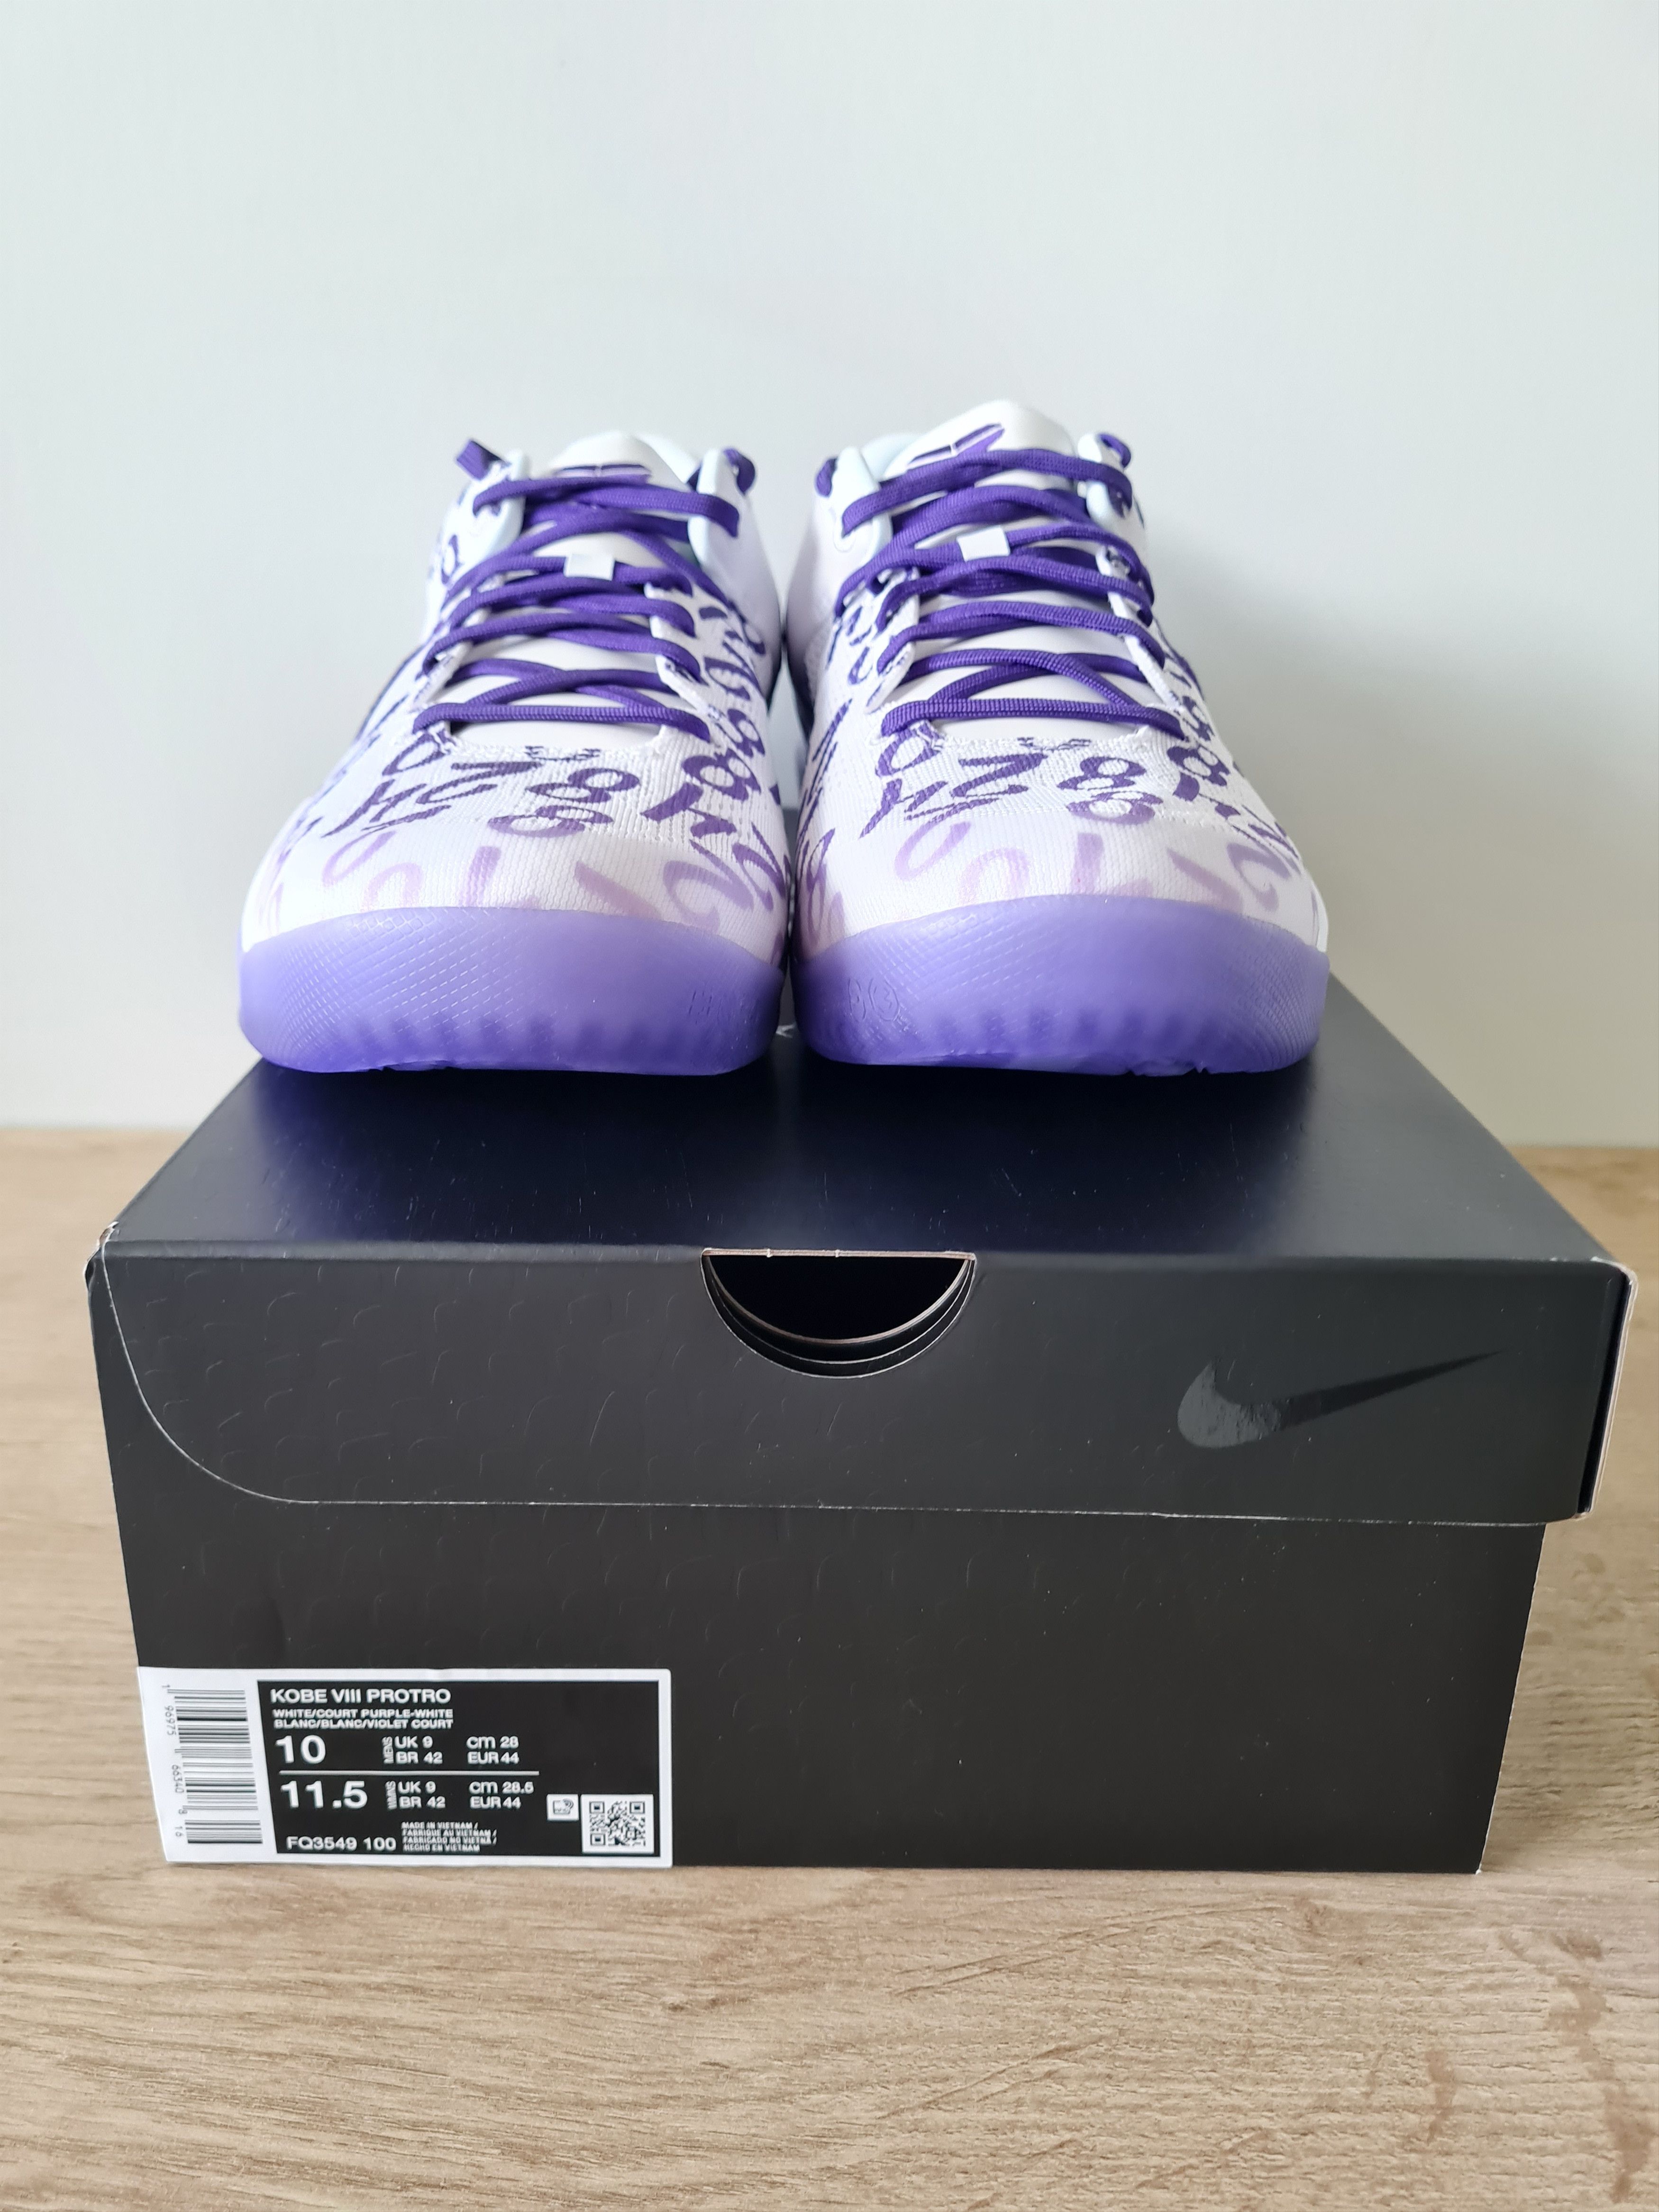 Nike Kobe 8 Protro Court Purple FQ3549-100